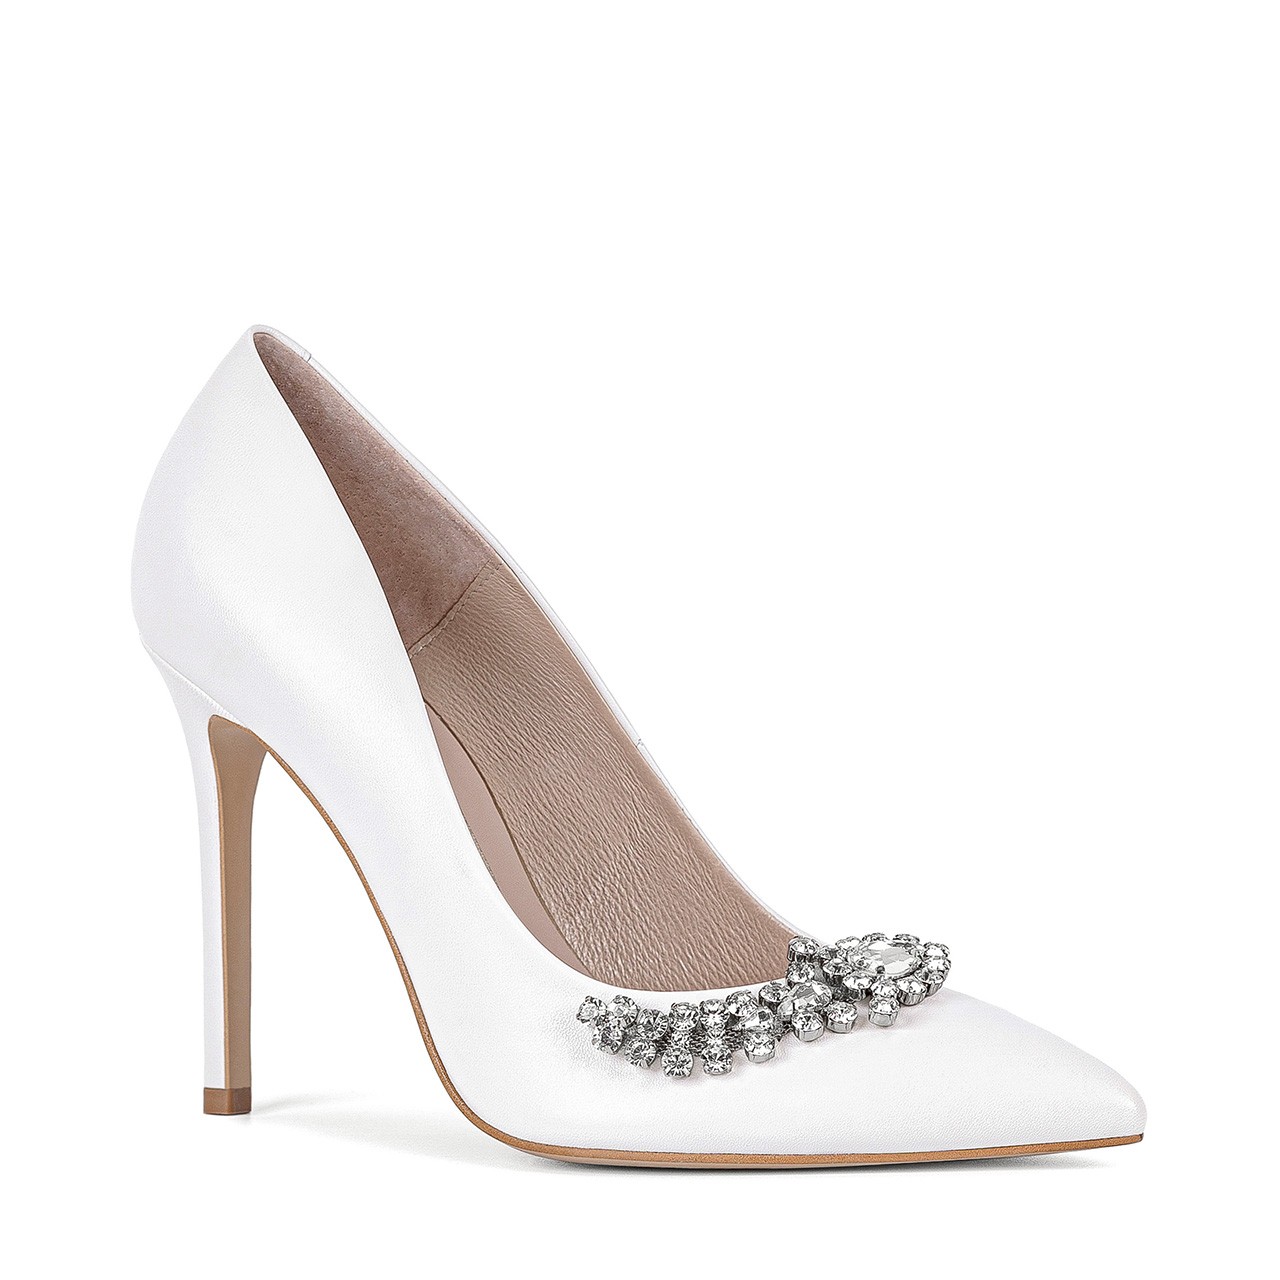 HUANLE High Heels Wedding Women's Shoes Diamond Pumps Cinderella Crystal  Shoes Rhinestone Lace Toe Glitter Party Silver Red 9 cm Pumps, 40 :  Amazon.de: Fashion